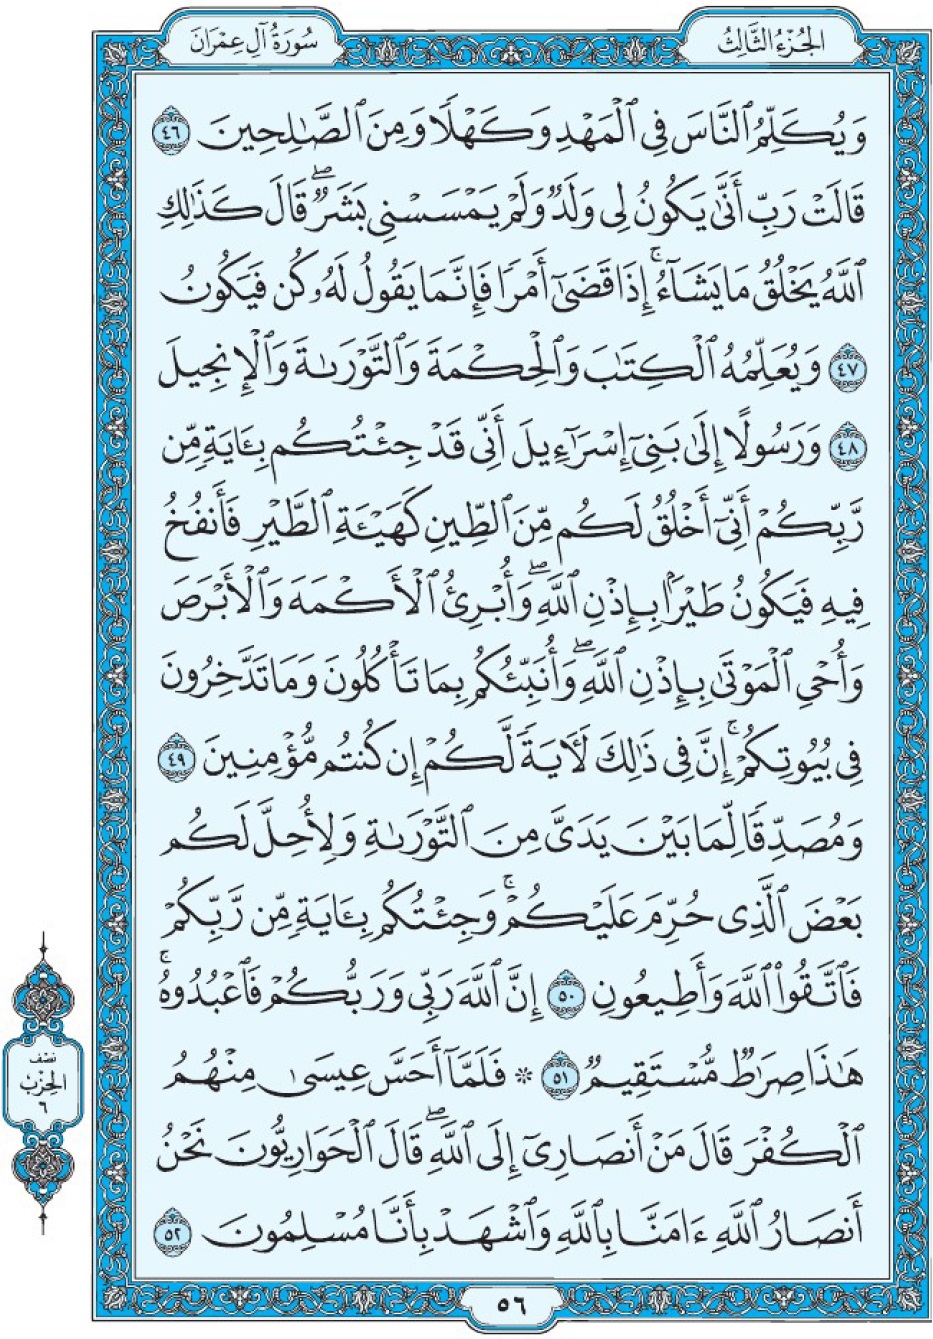 Коран Мединский мусхаф страница 56, Али Имран, аят 46-52